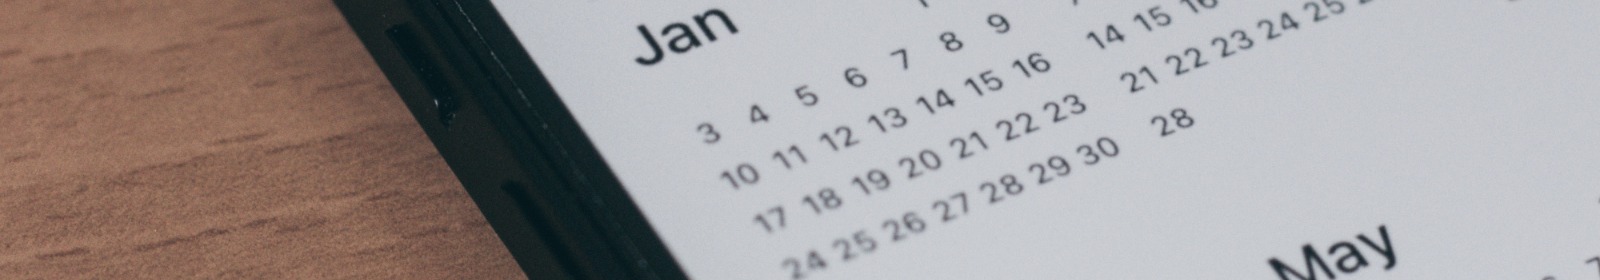 digital calendar on tablet